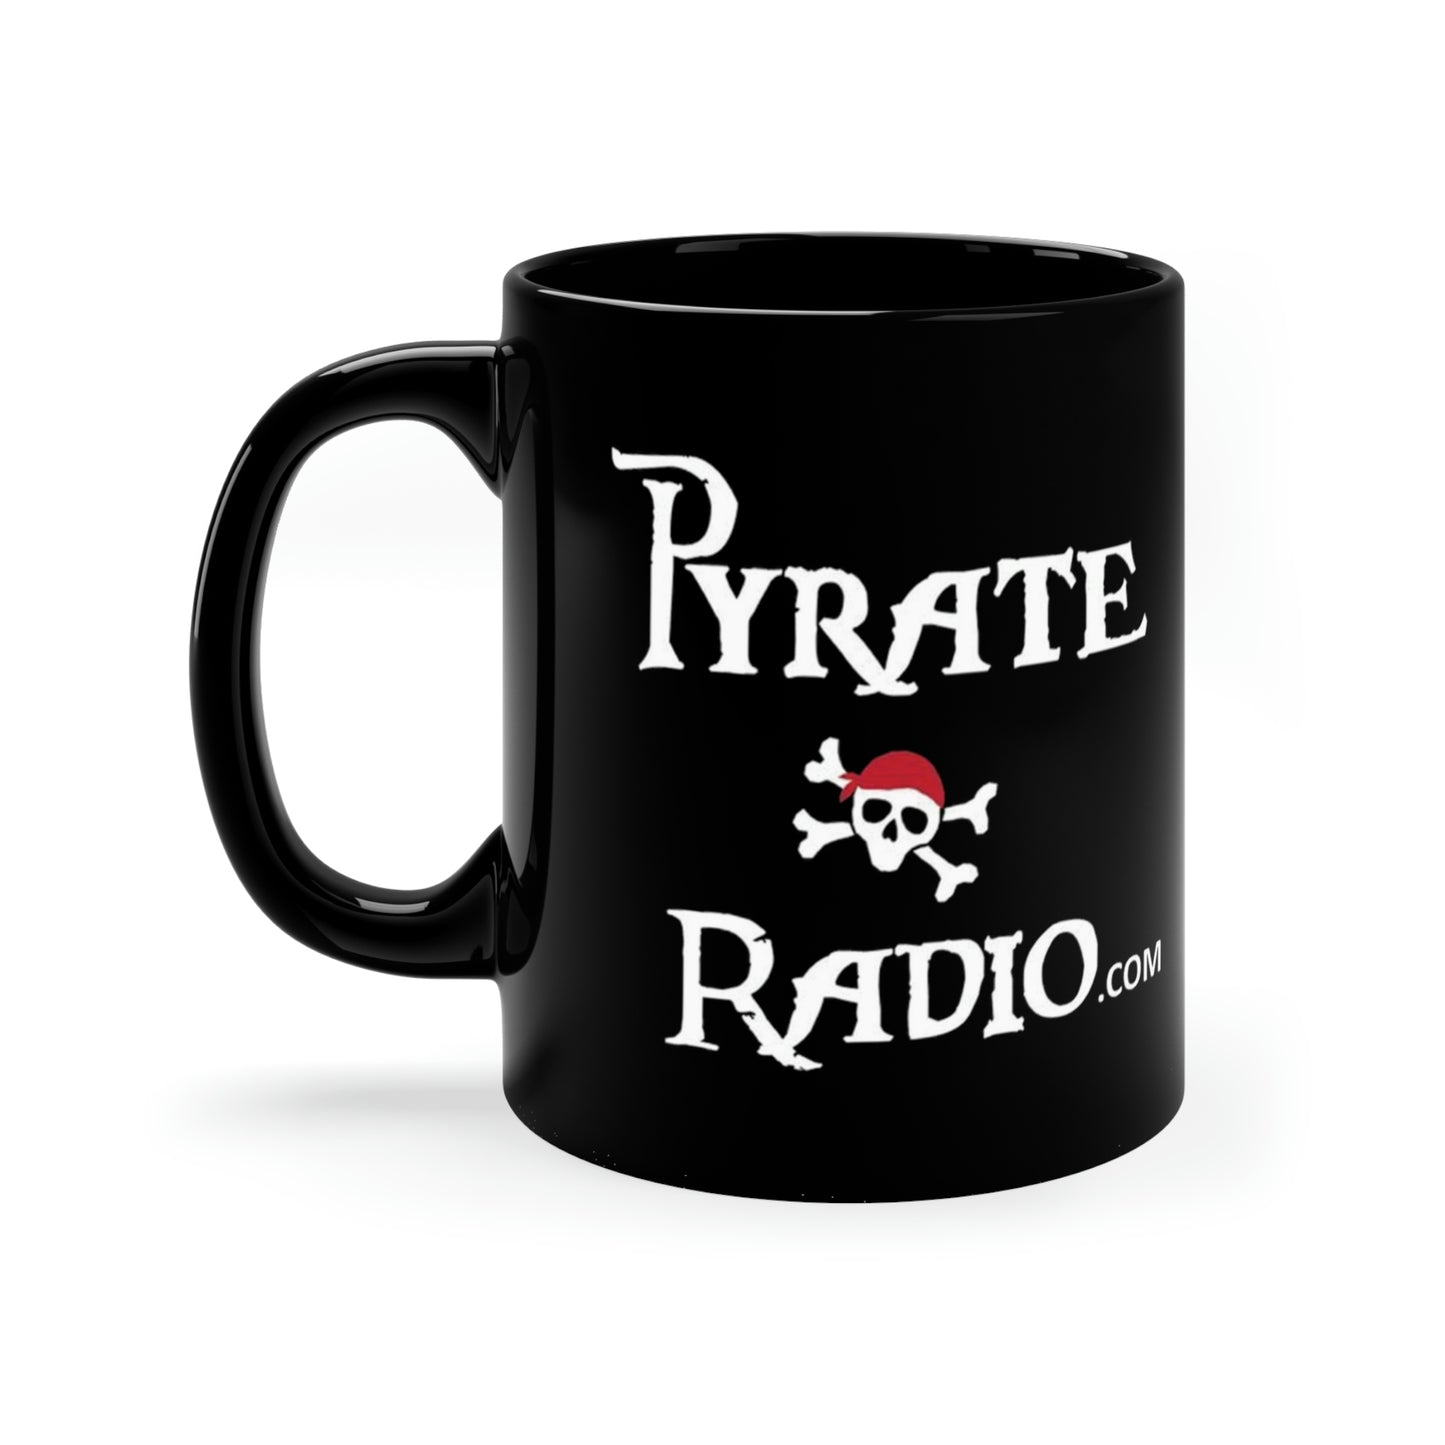 Pyrate Radio Coffee Mug